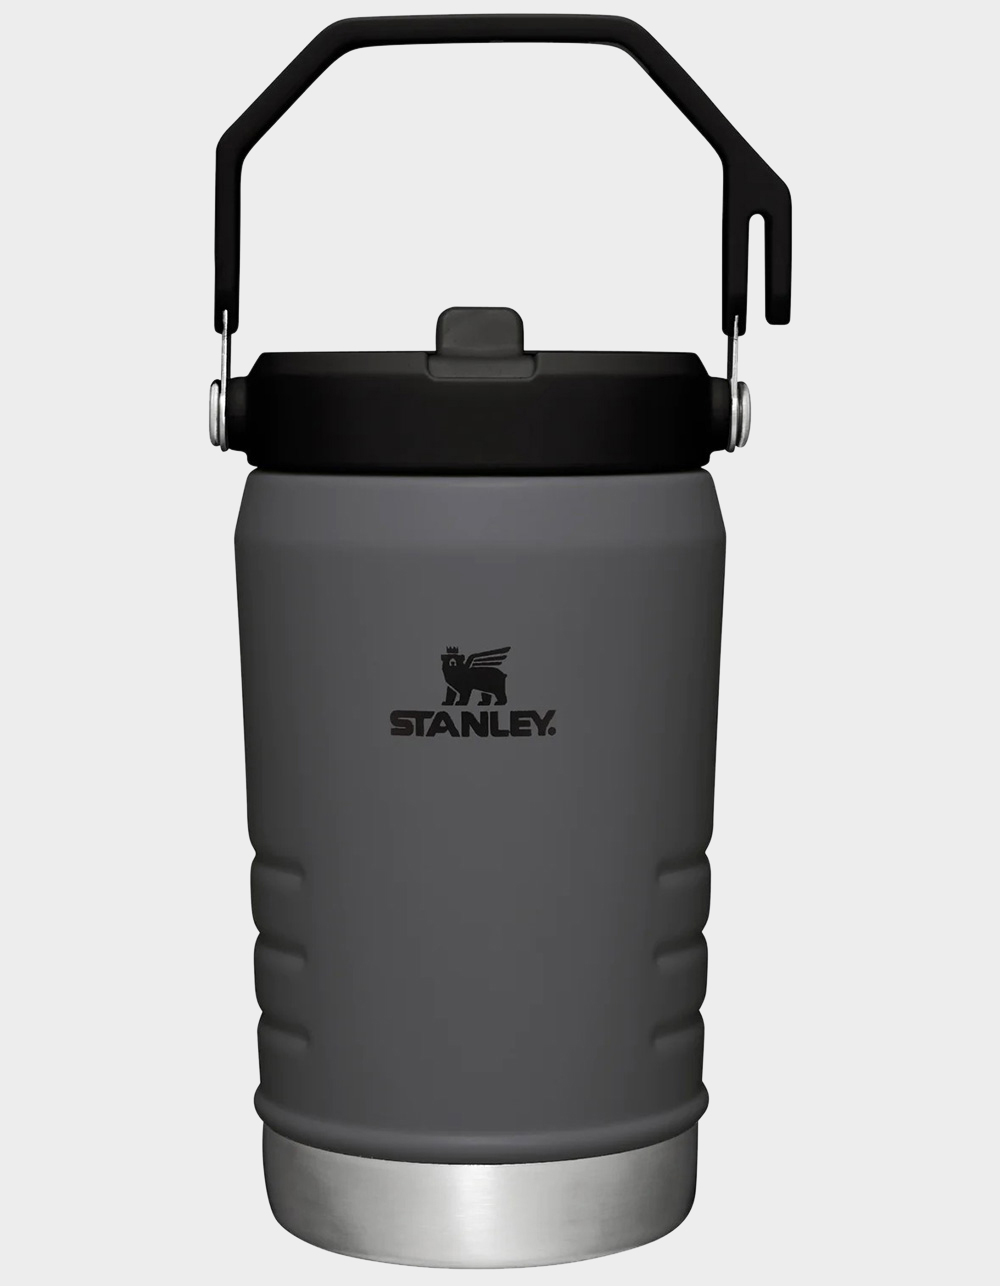 Stanley 40 oz tumbler with handle vs Stanle ice flow water bottle